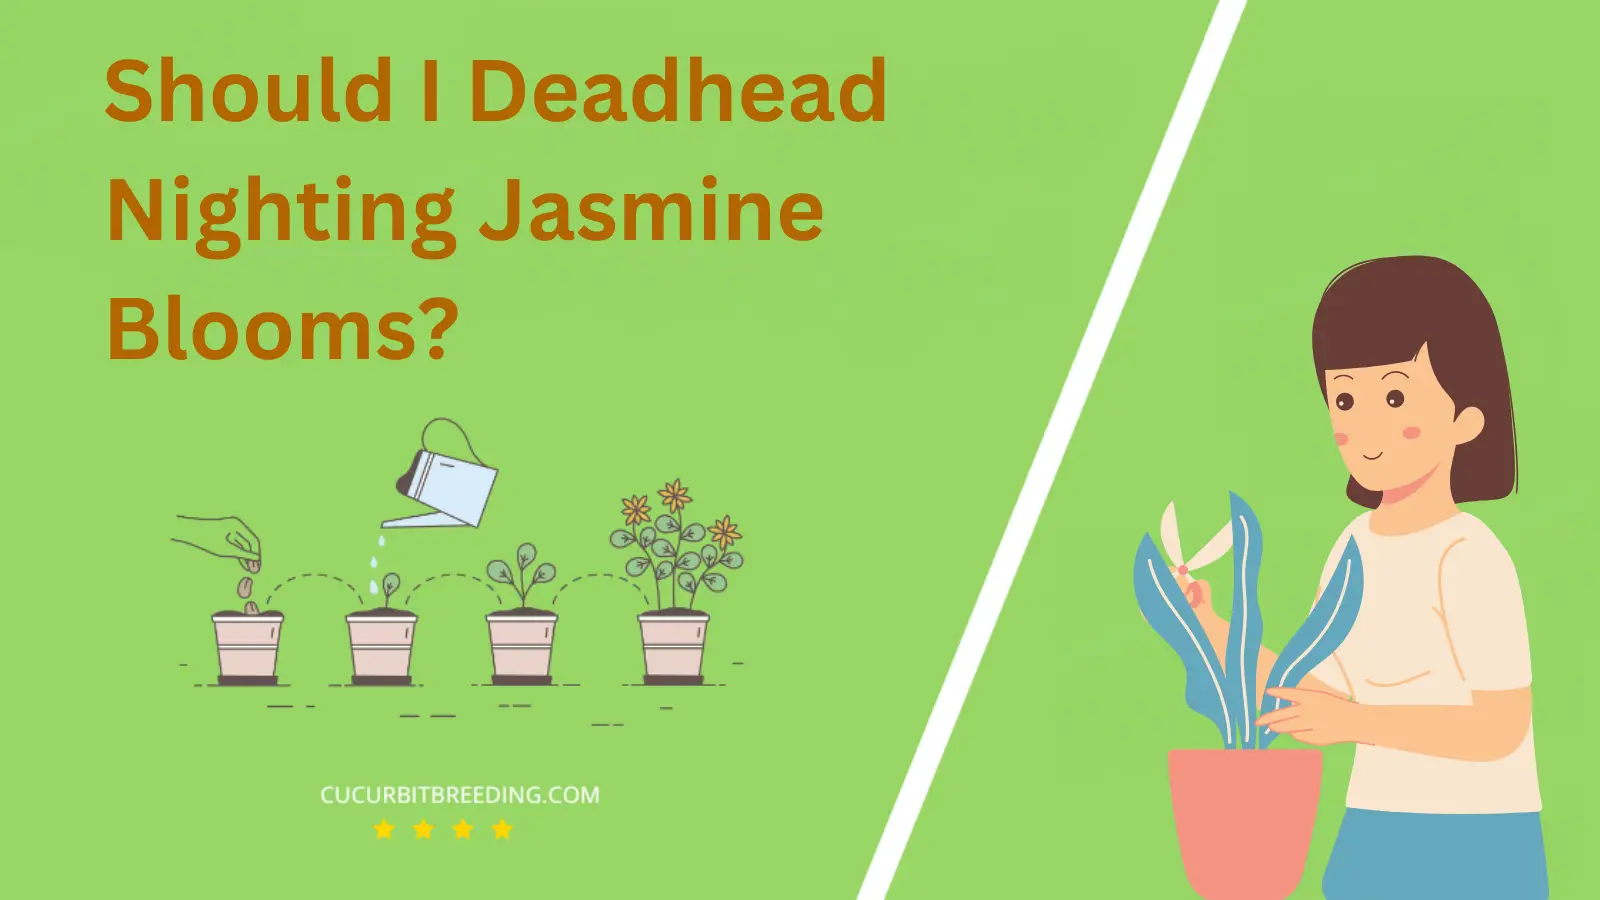 Should I Deadhead Nighting Jasmine Blooms?